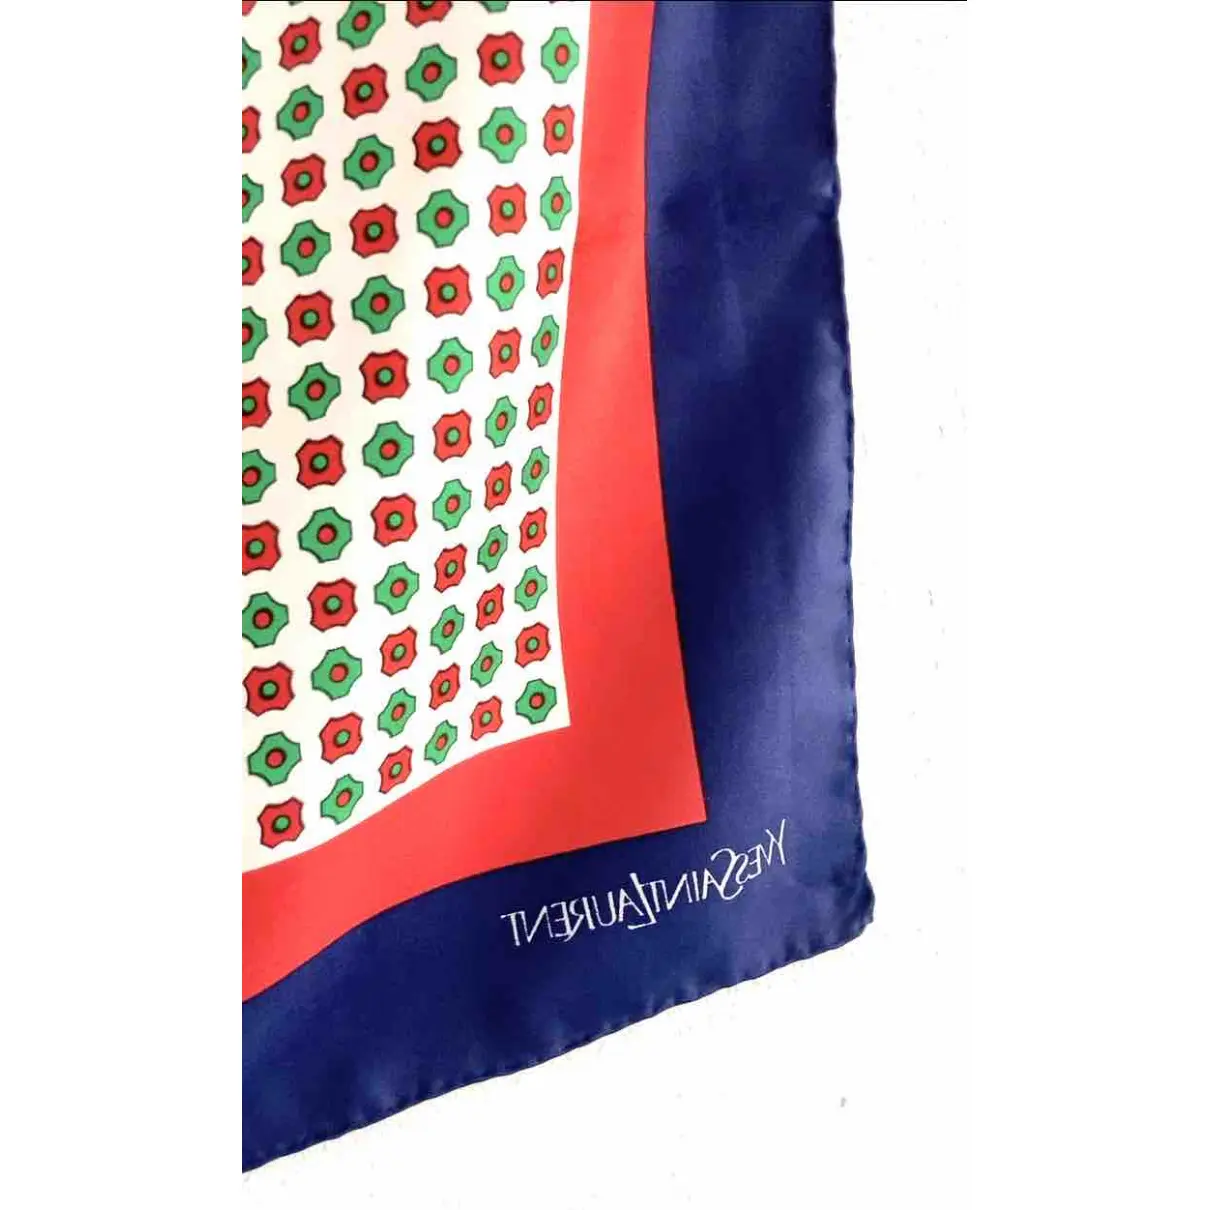 Silk handkerchief Yves Saint Laurent - Vintage